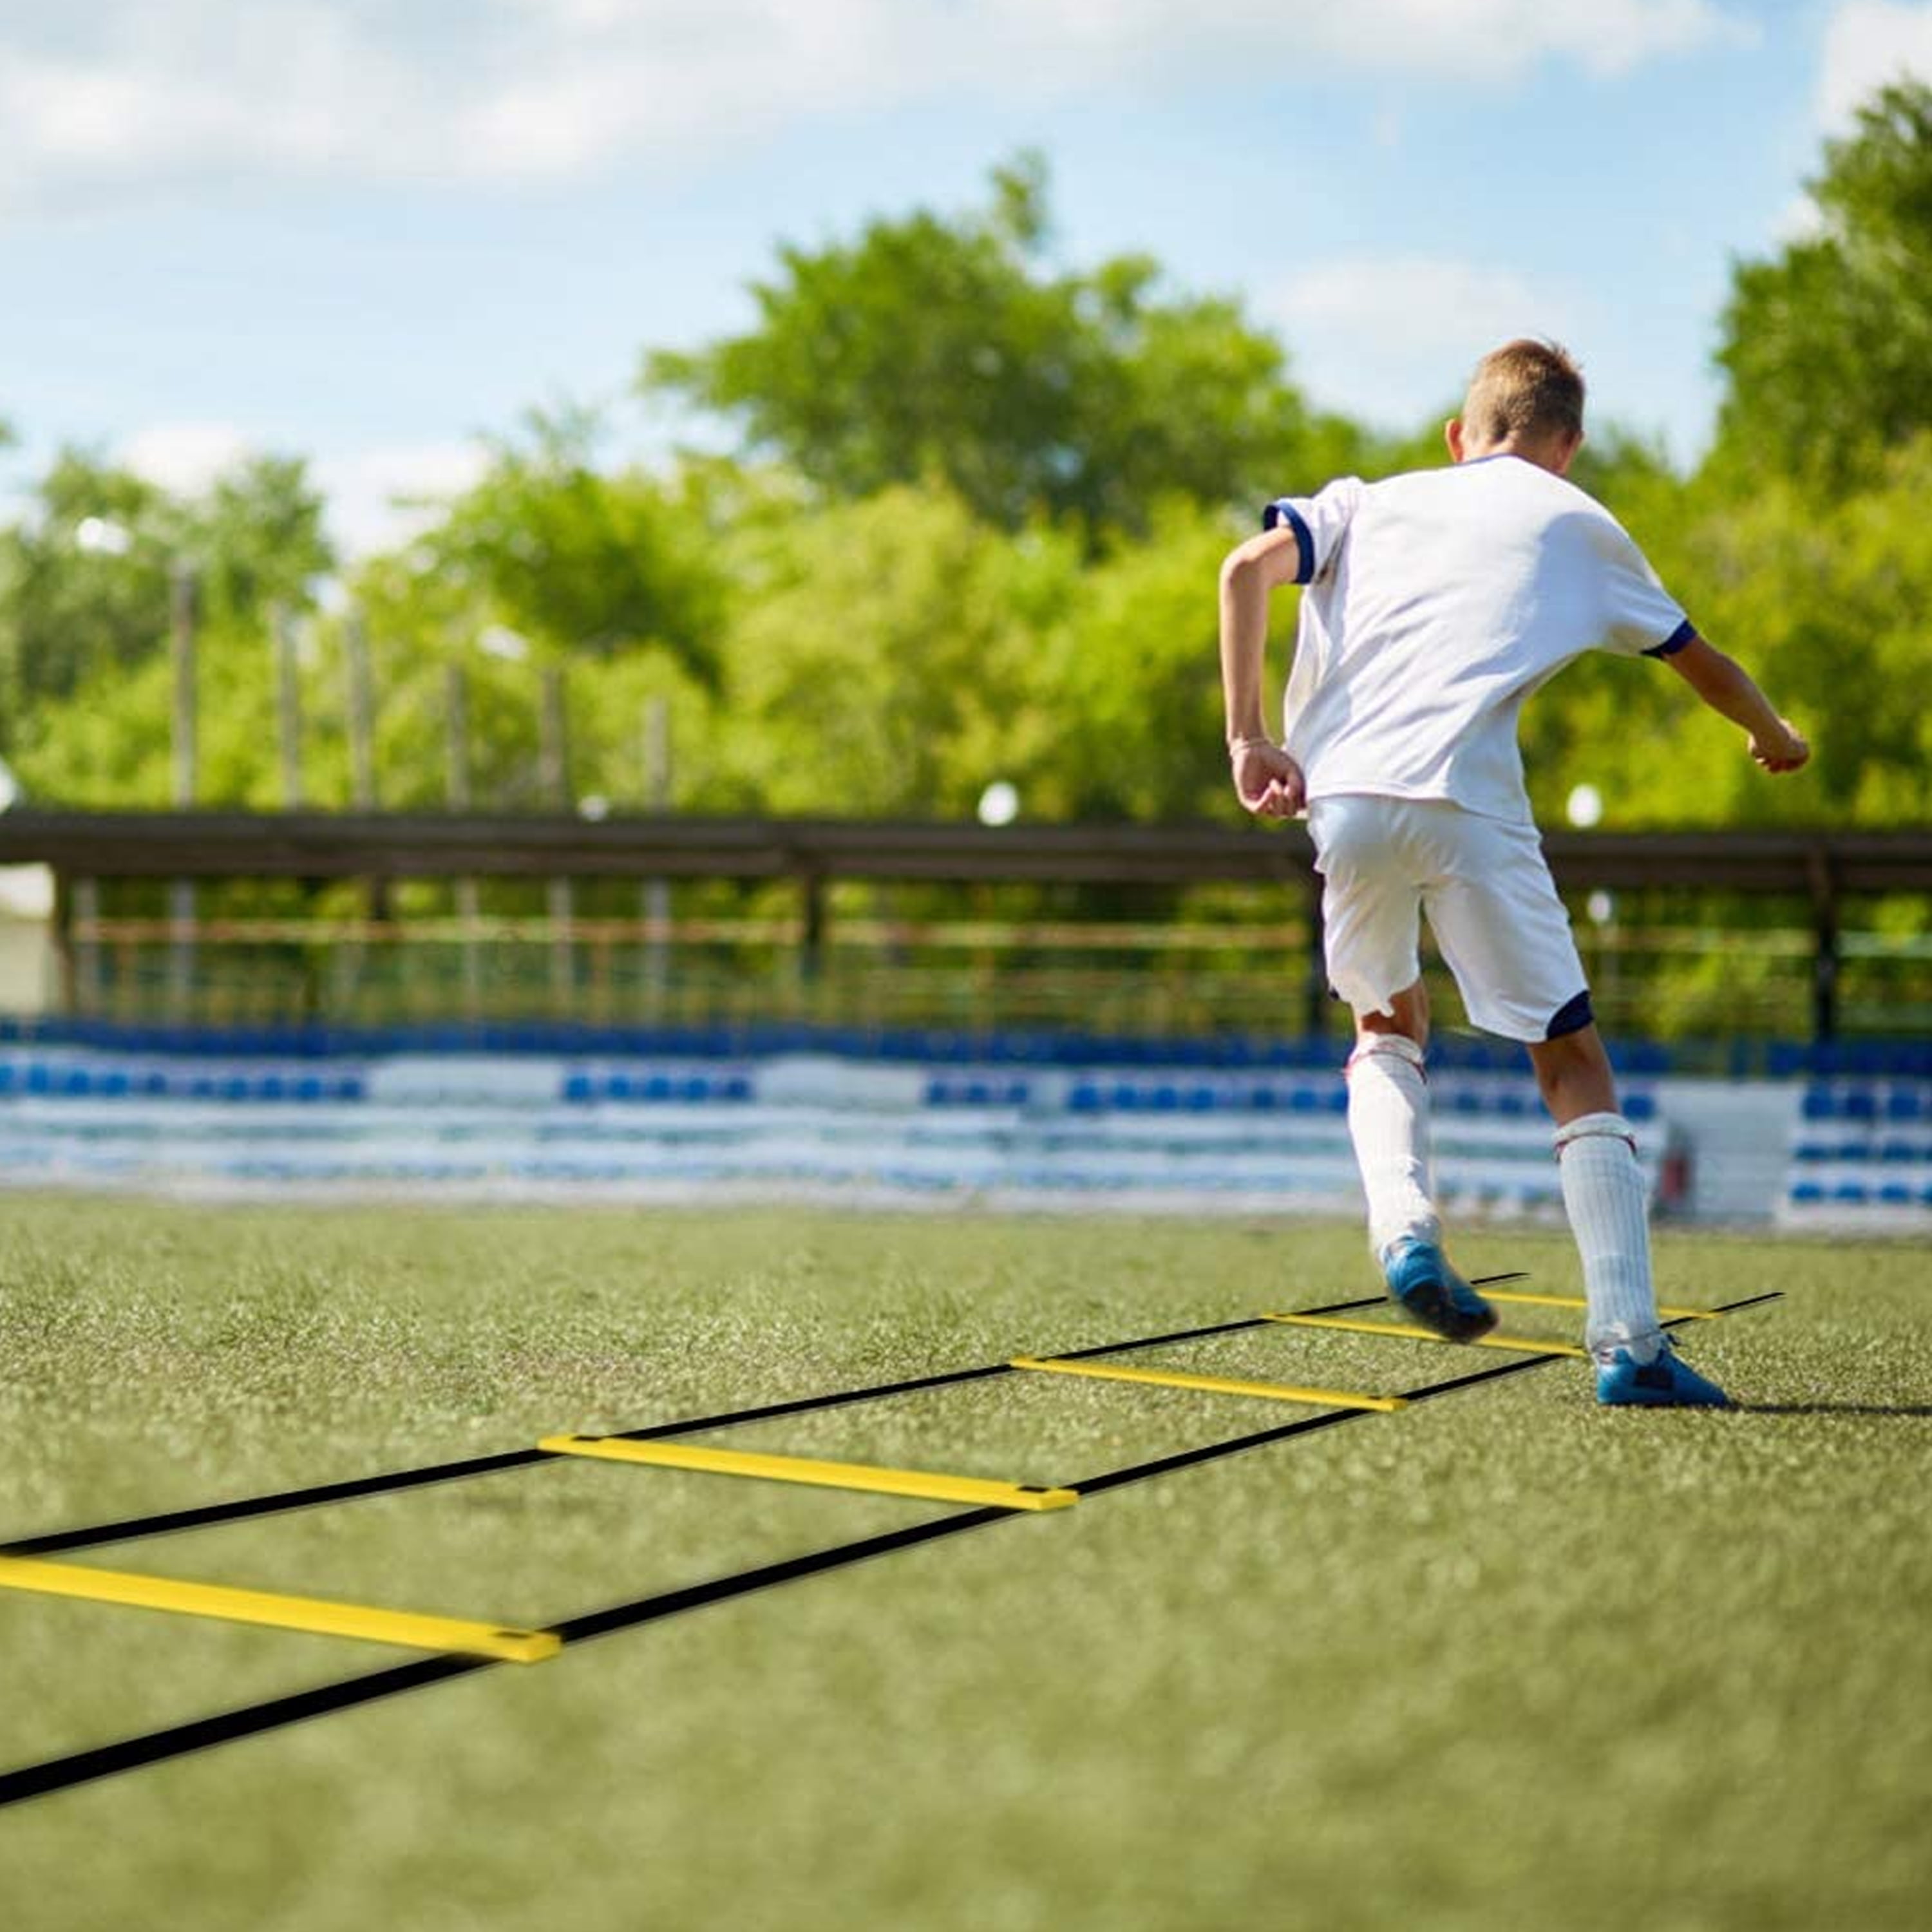 9 Rungs Speed Ladder Soccer Football Sports Training Exercise Equipment Tool Set 